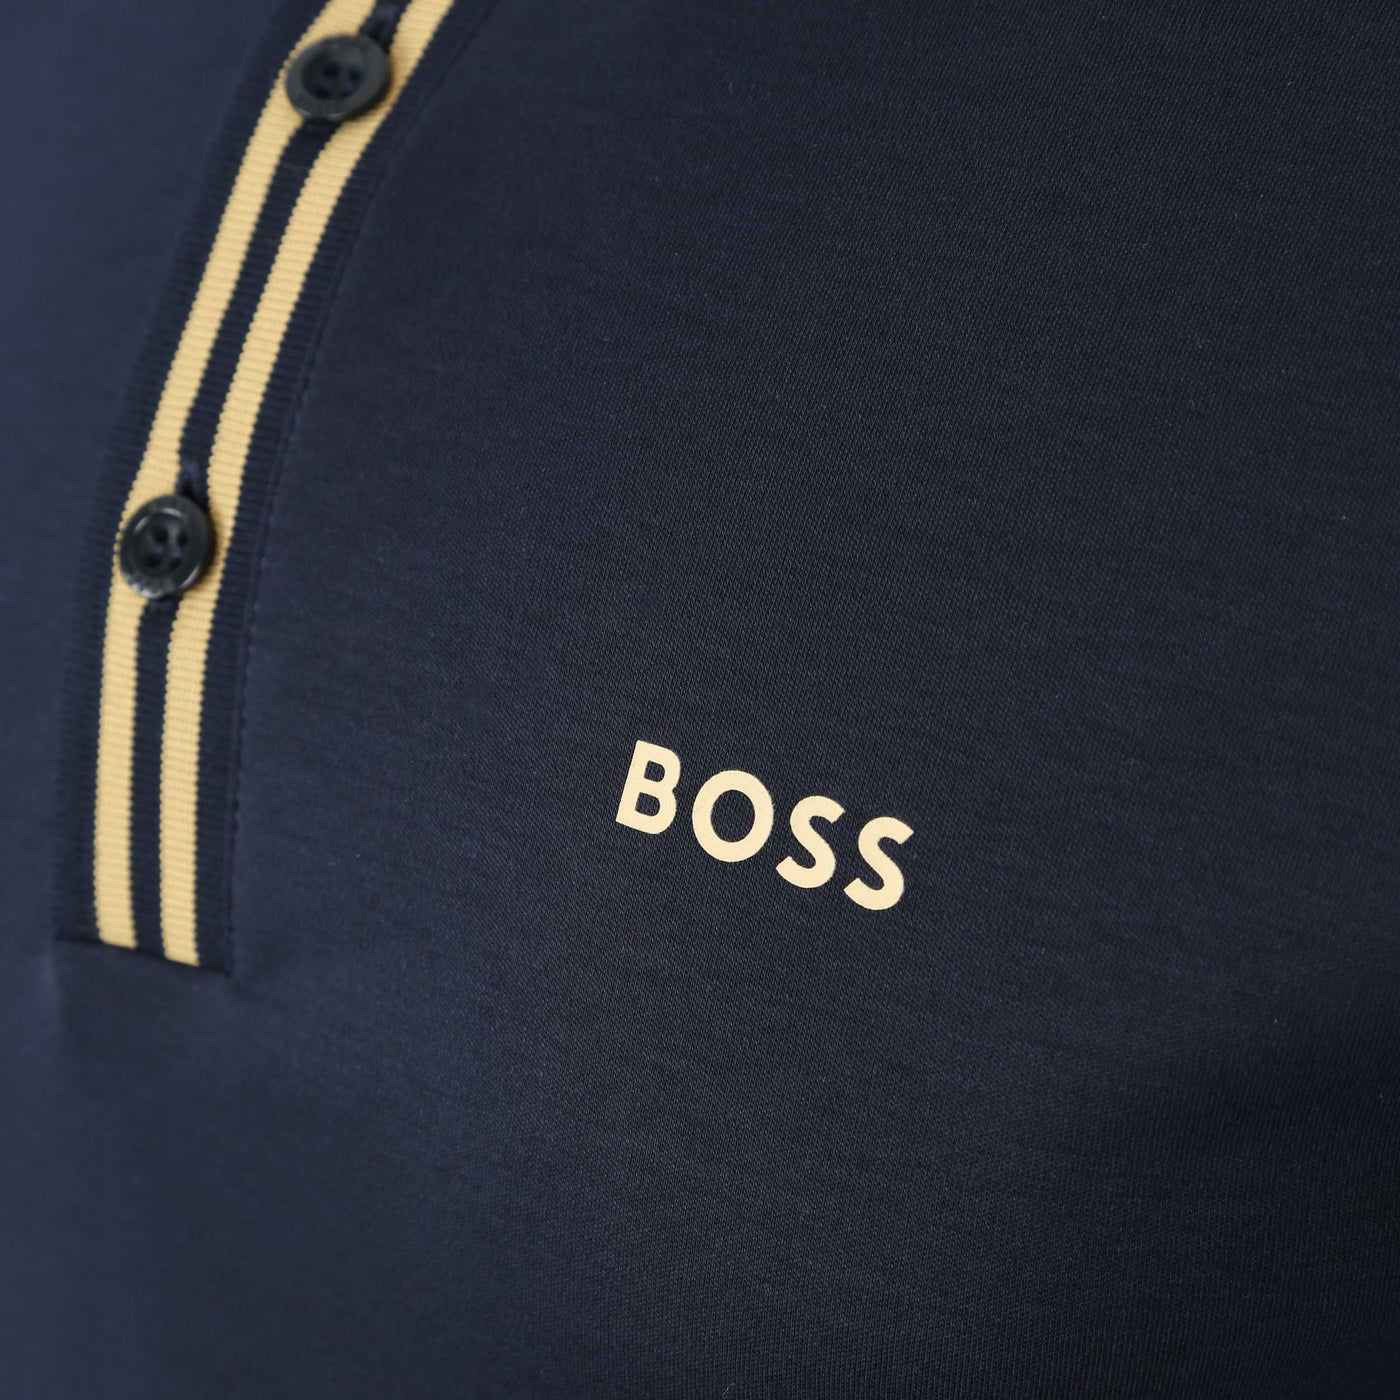 BOSS Paule1 Polo Shirt in Navy & Gold